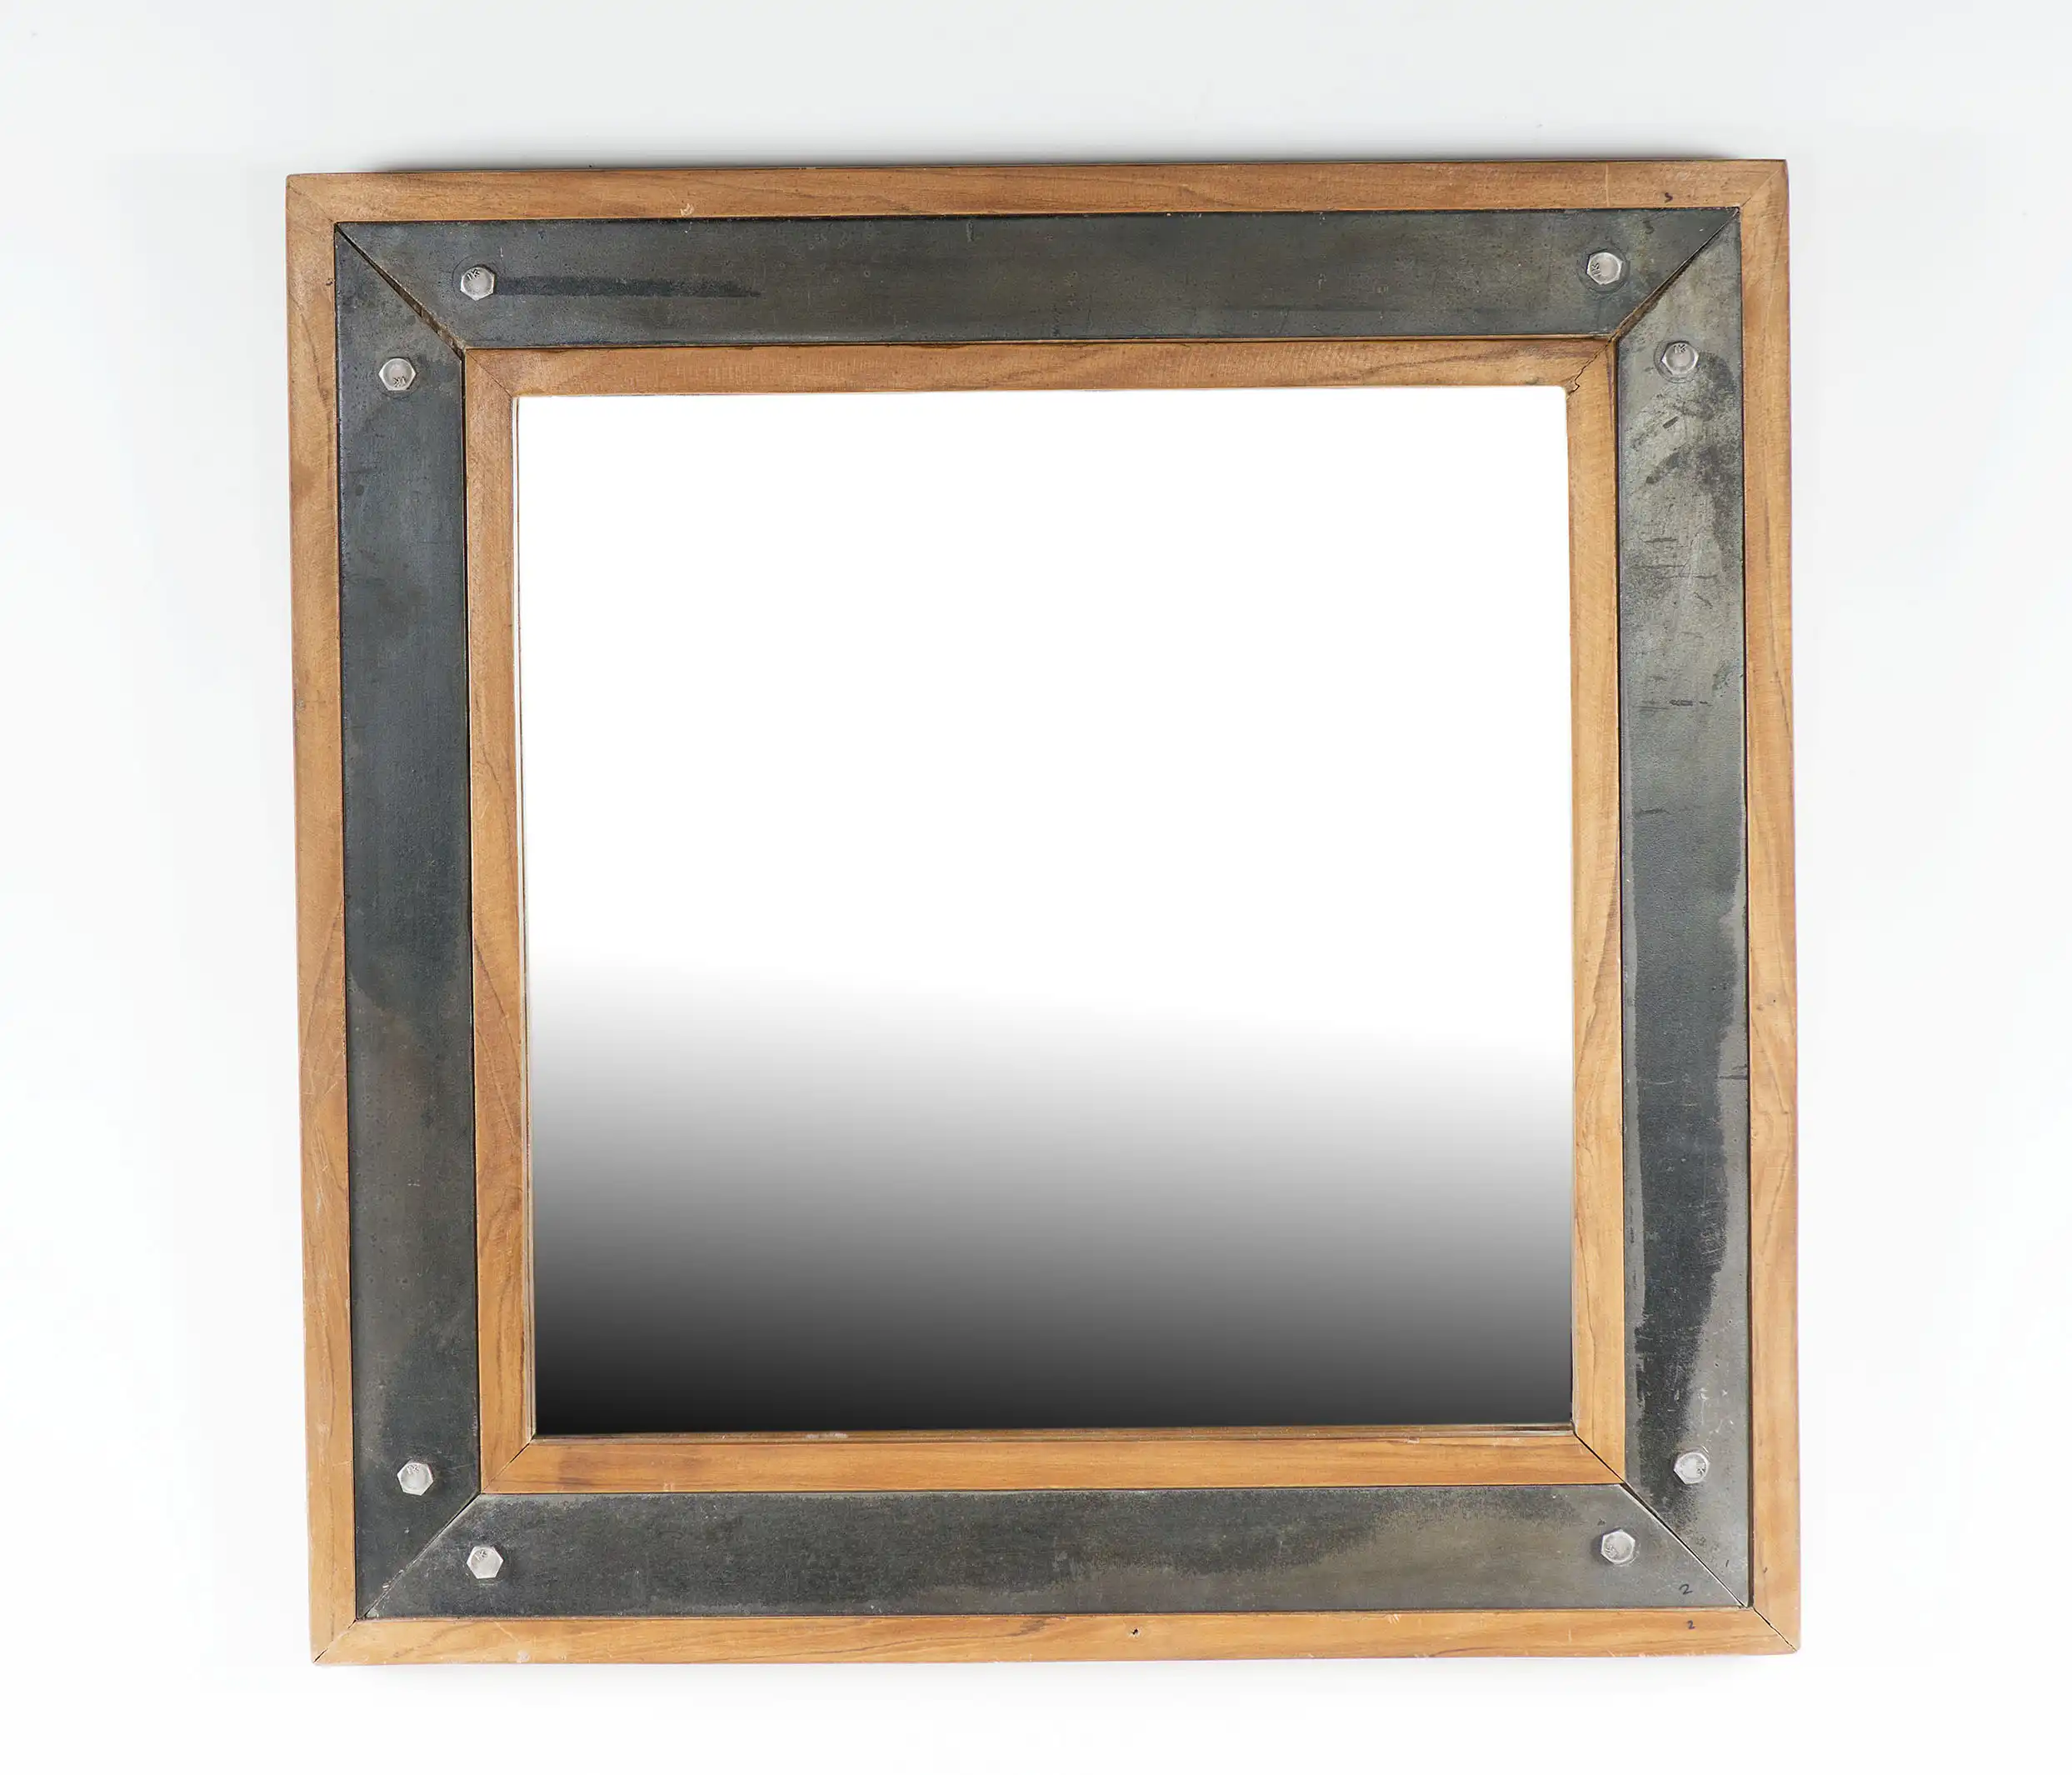 Reclaimed Wood Mirror Frame - popular handicrafts